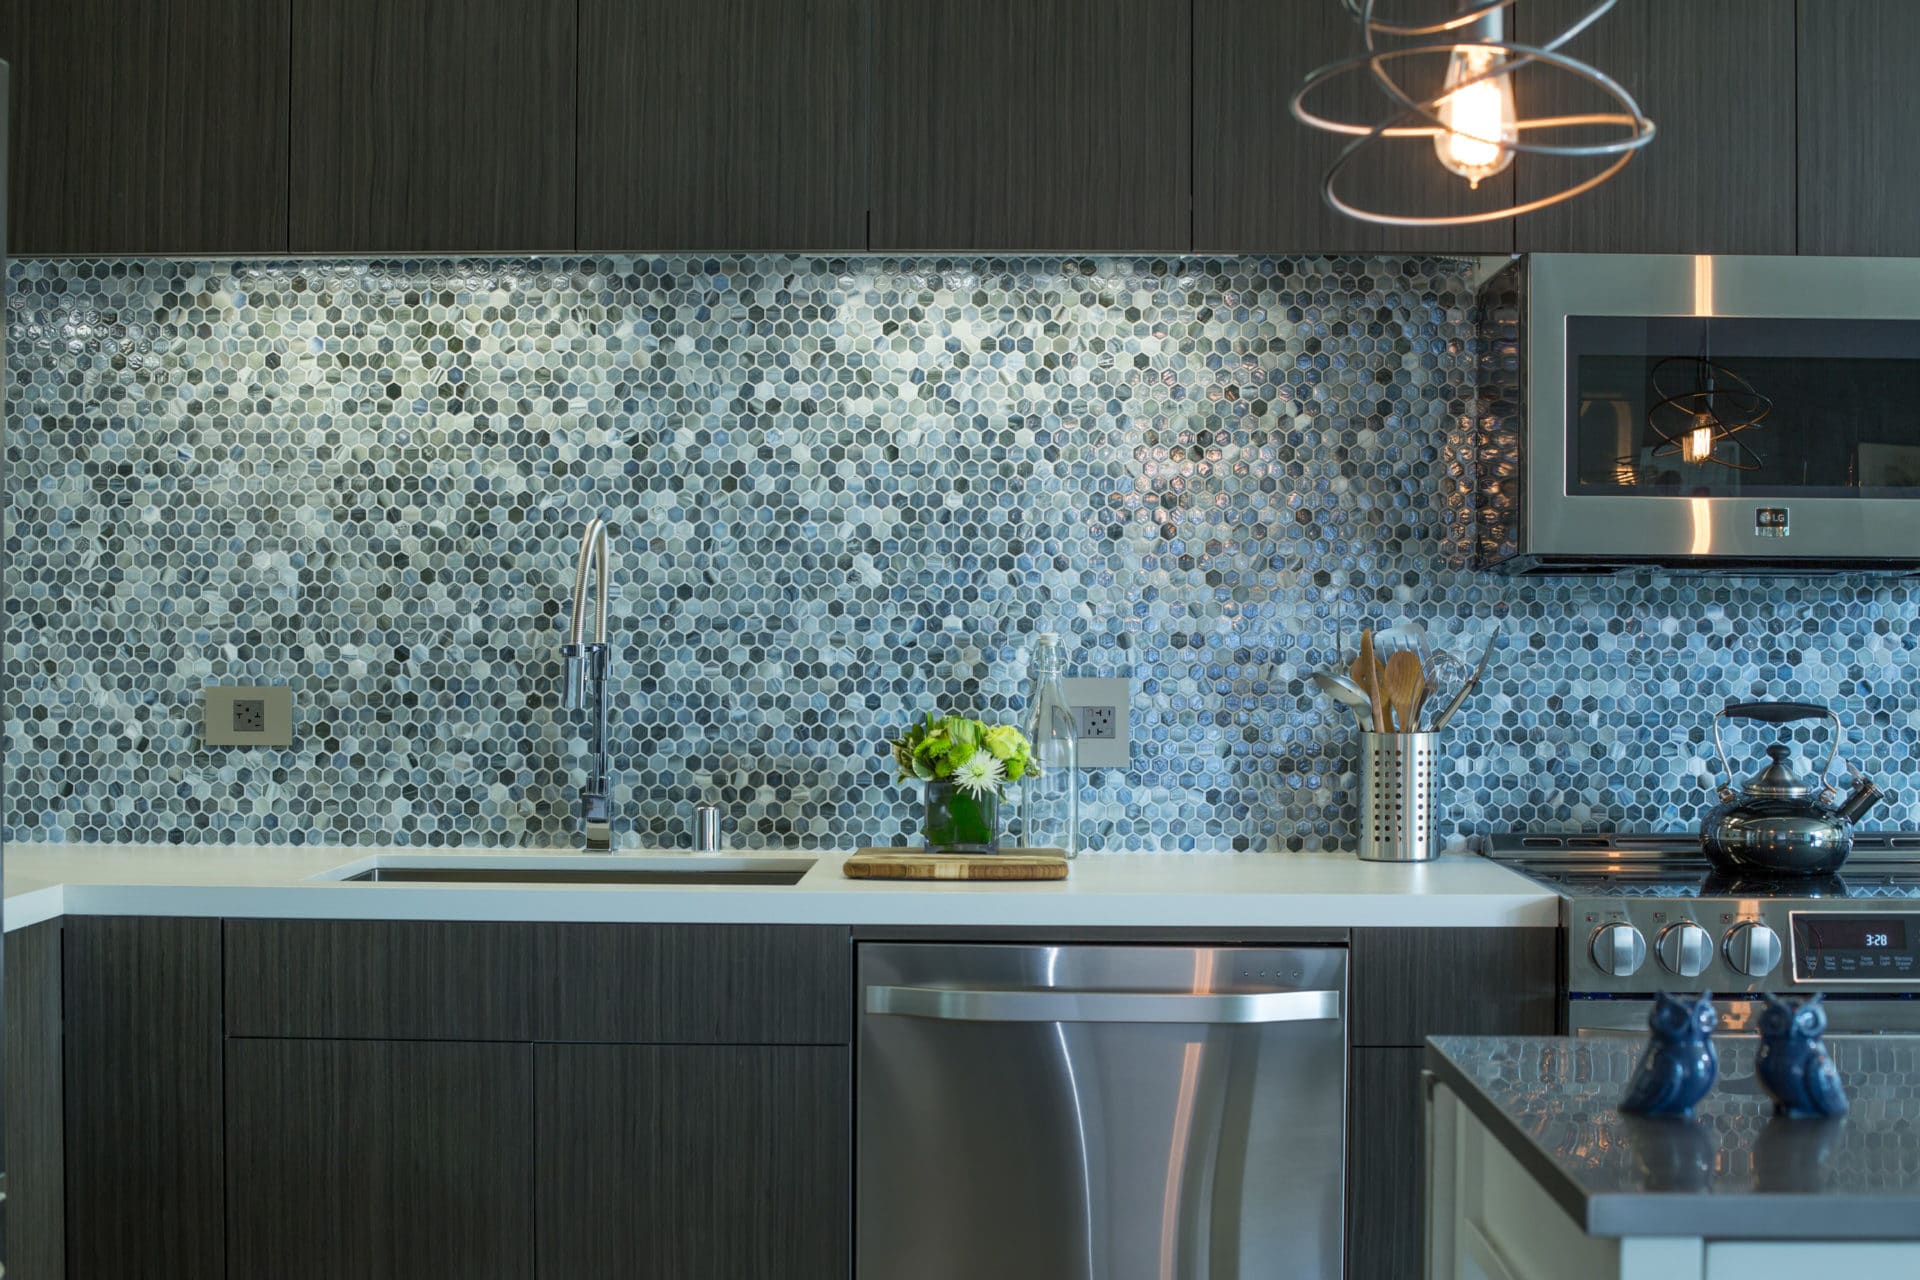 Ivory Kitchen Cabinets with Gray Flower Mosaic Tile Backsplash -  Transitional - Kitchen